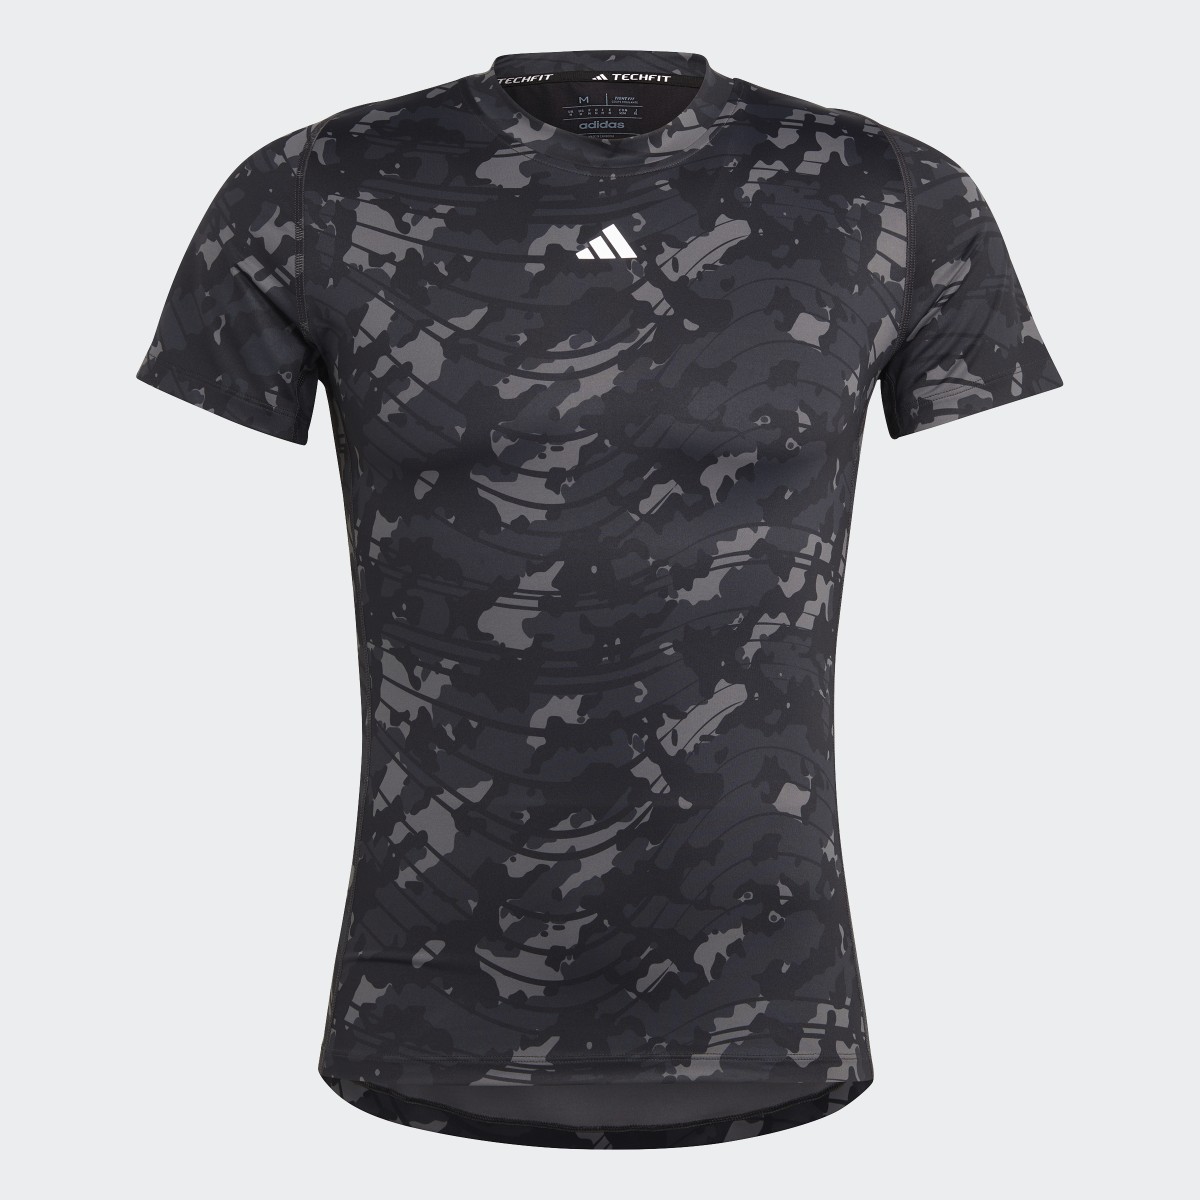 Adidas Techfit Allover Print Training T-Shirt. 5